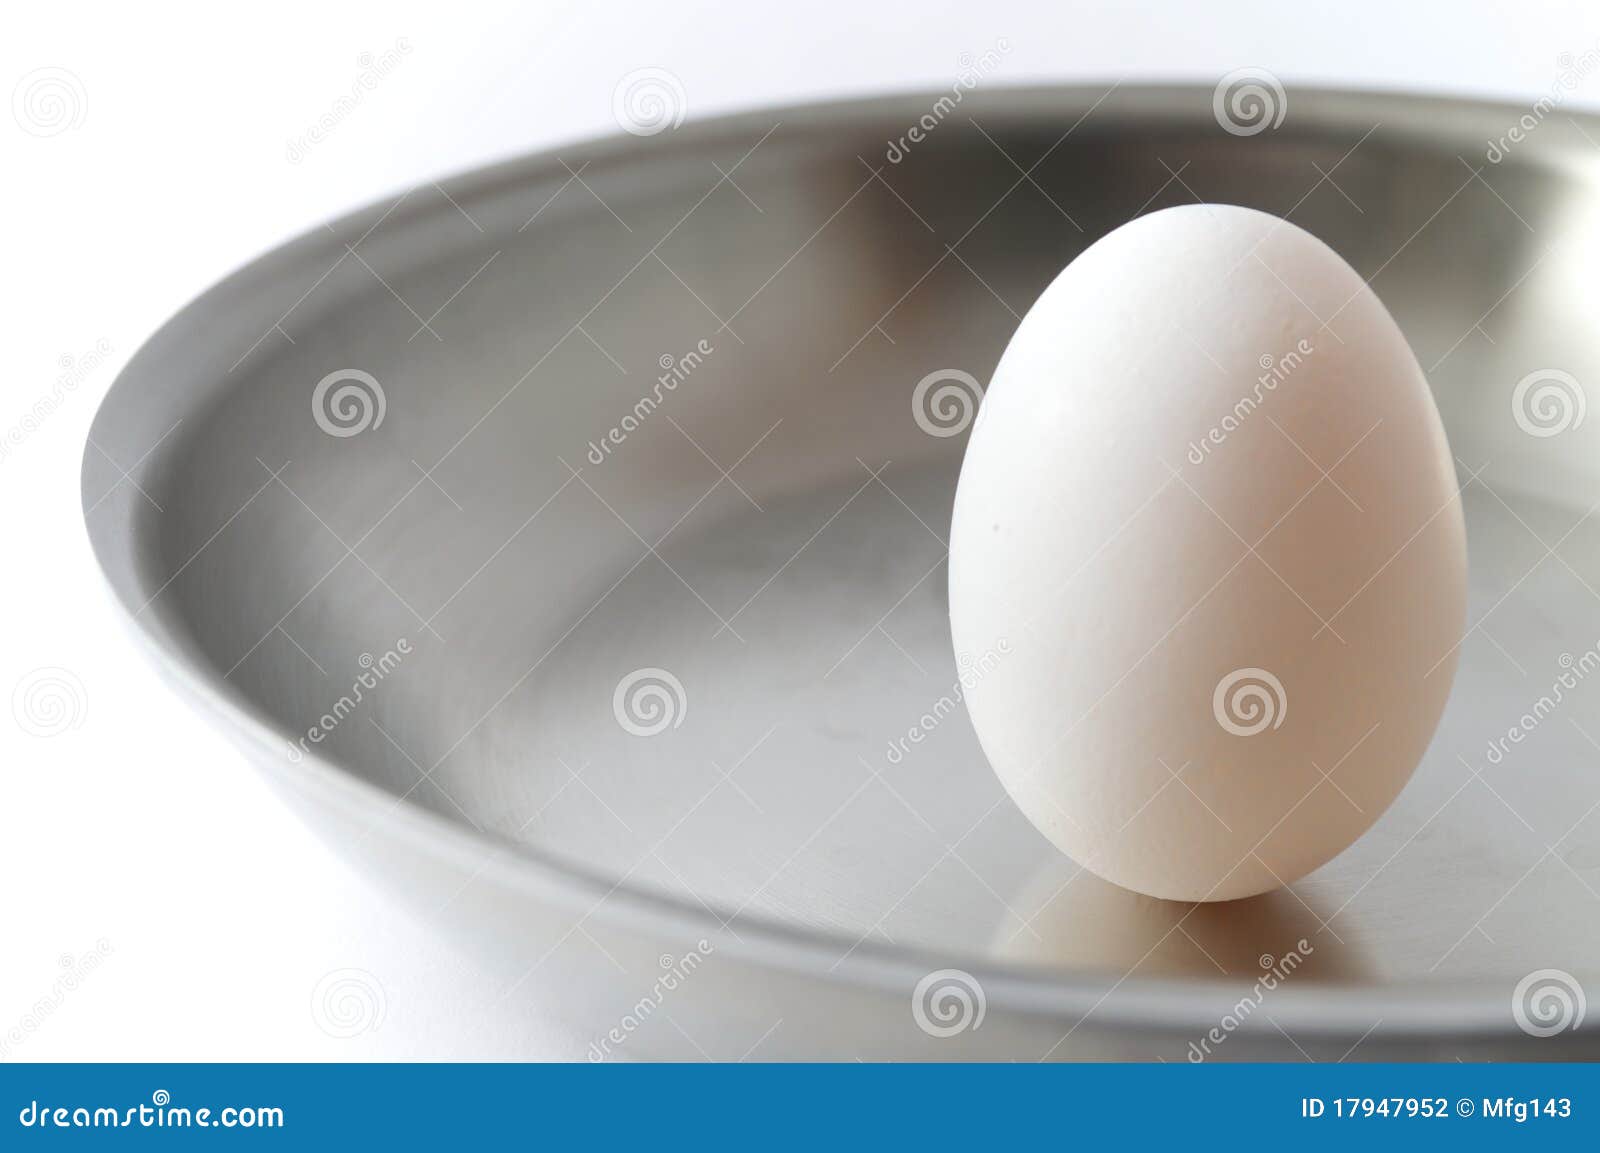 unbroken egg on a pan